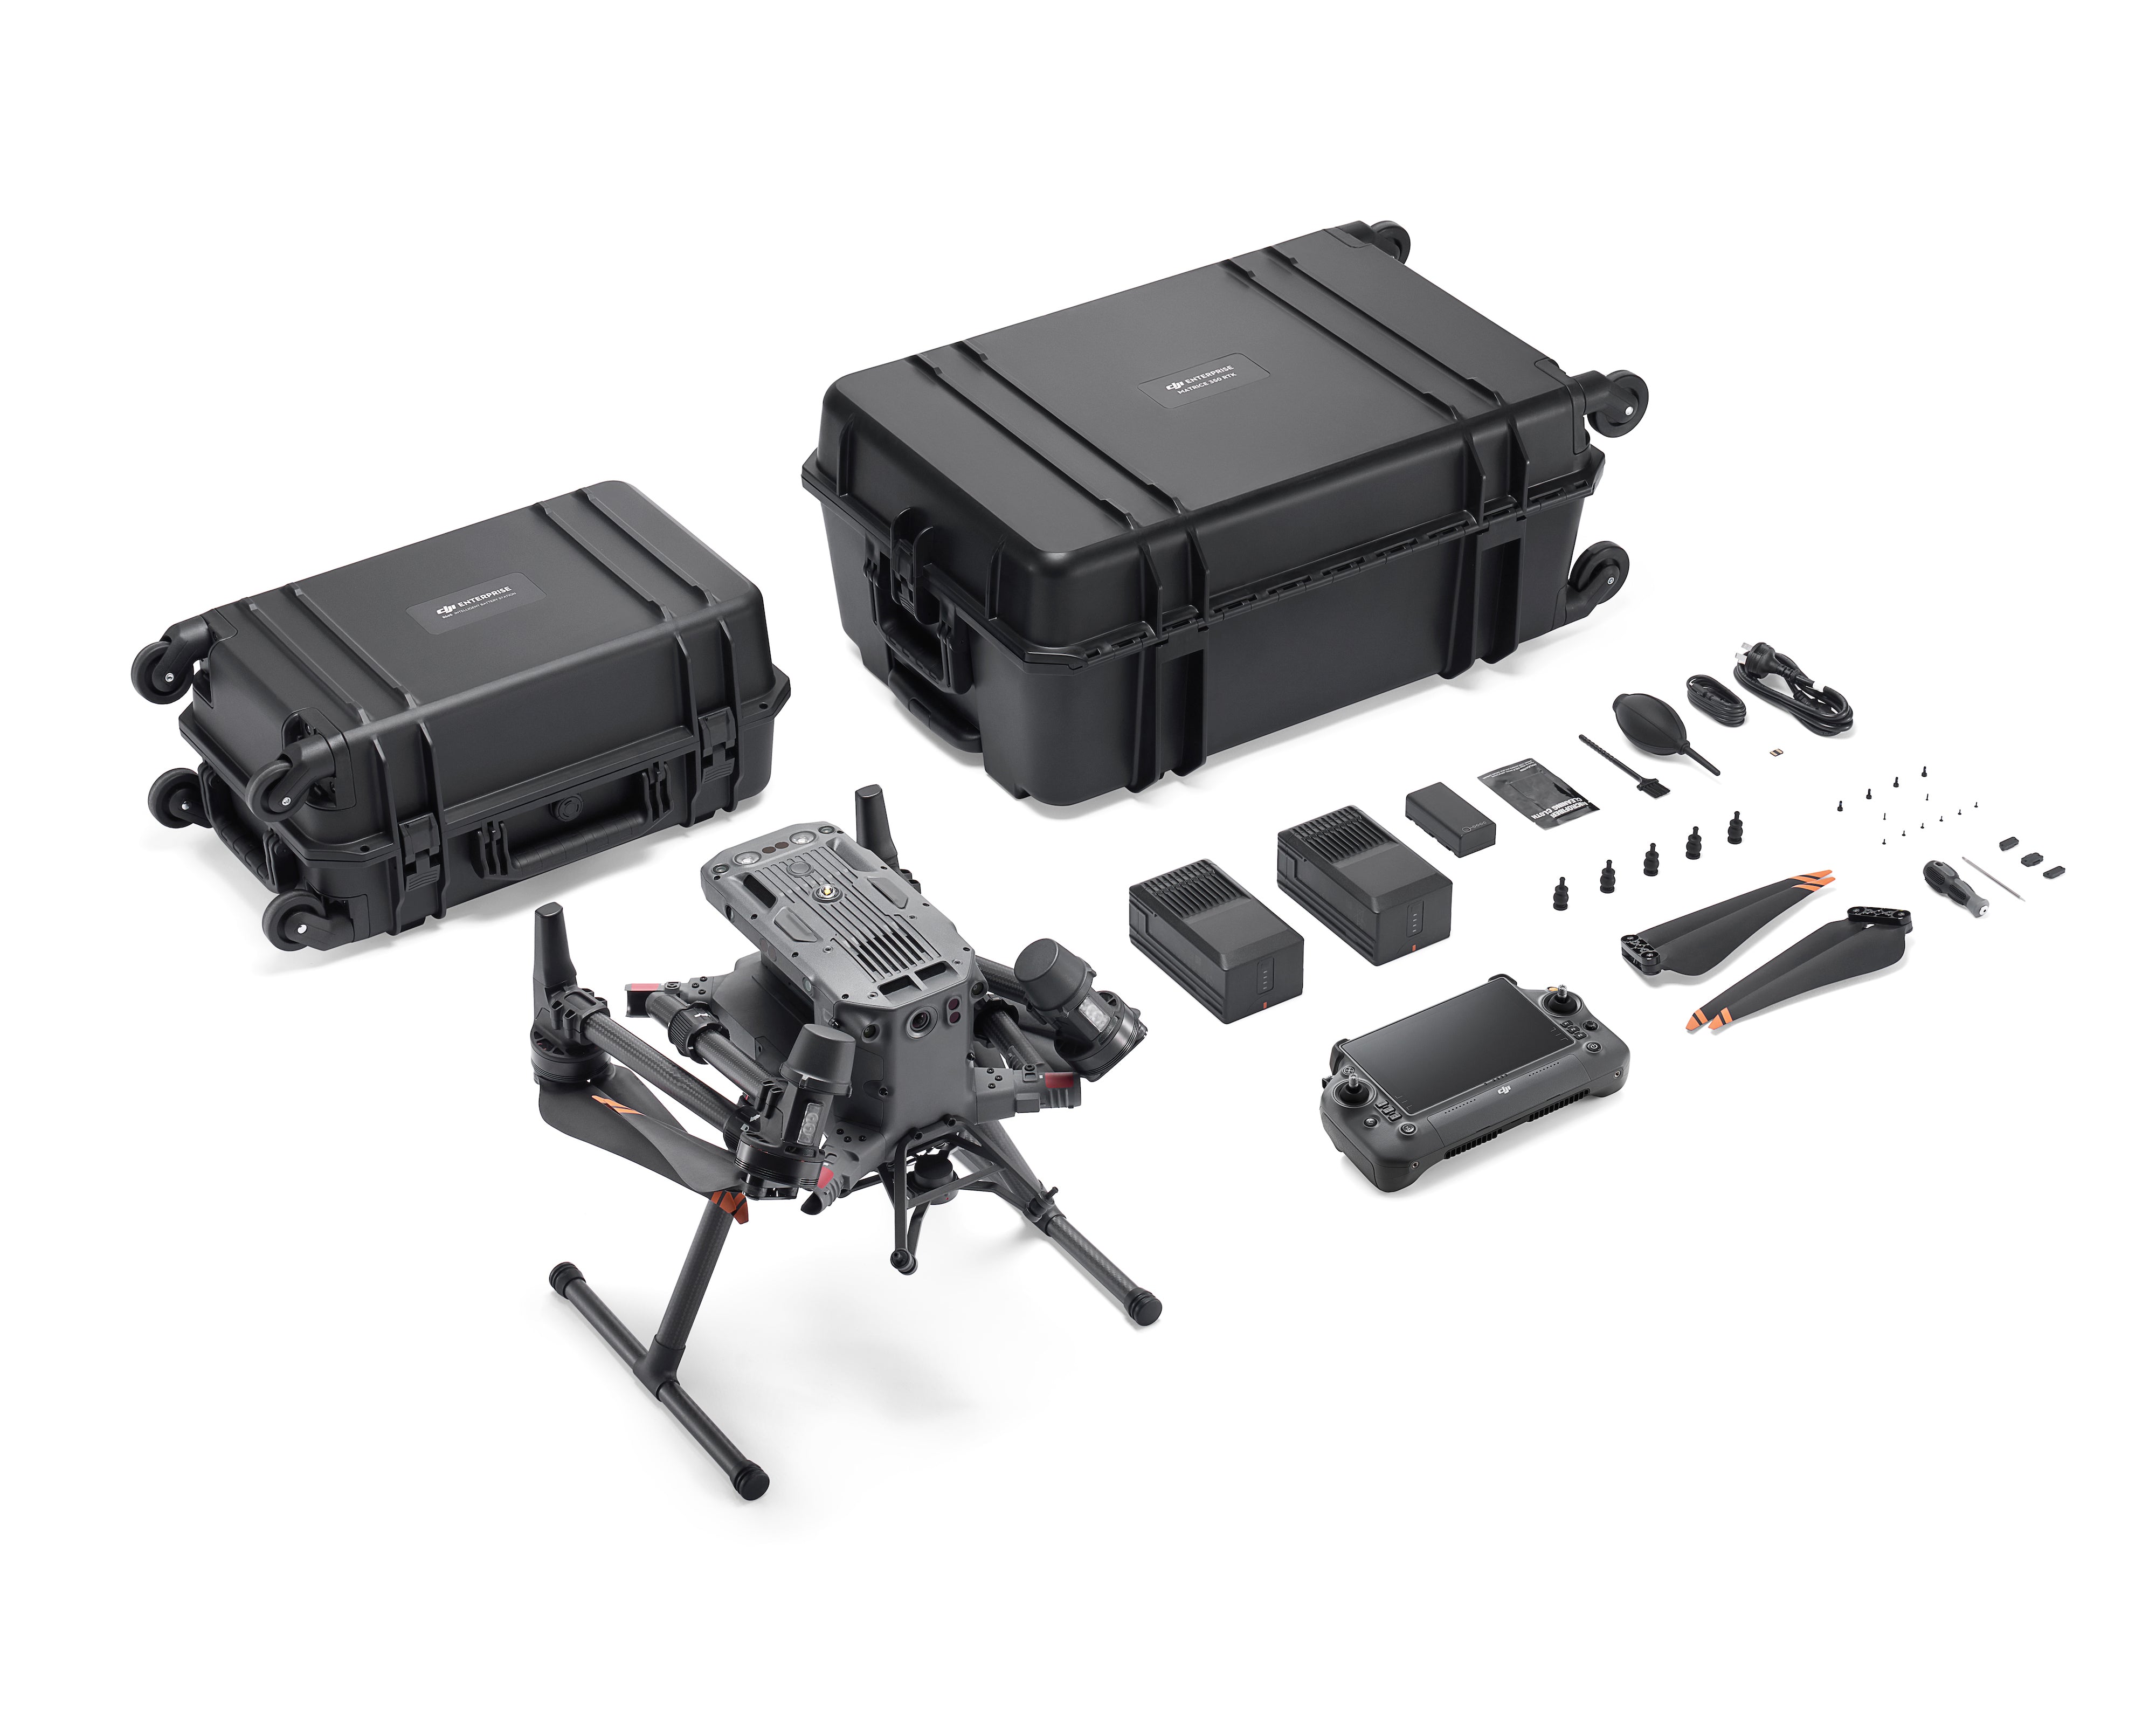 DJI Matrice 350 RTK Worry Free Plus Combo DJI Florida Drone Supply Buy DJI M350 RTK Enterprise Drone